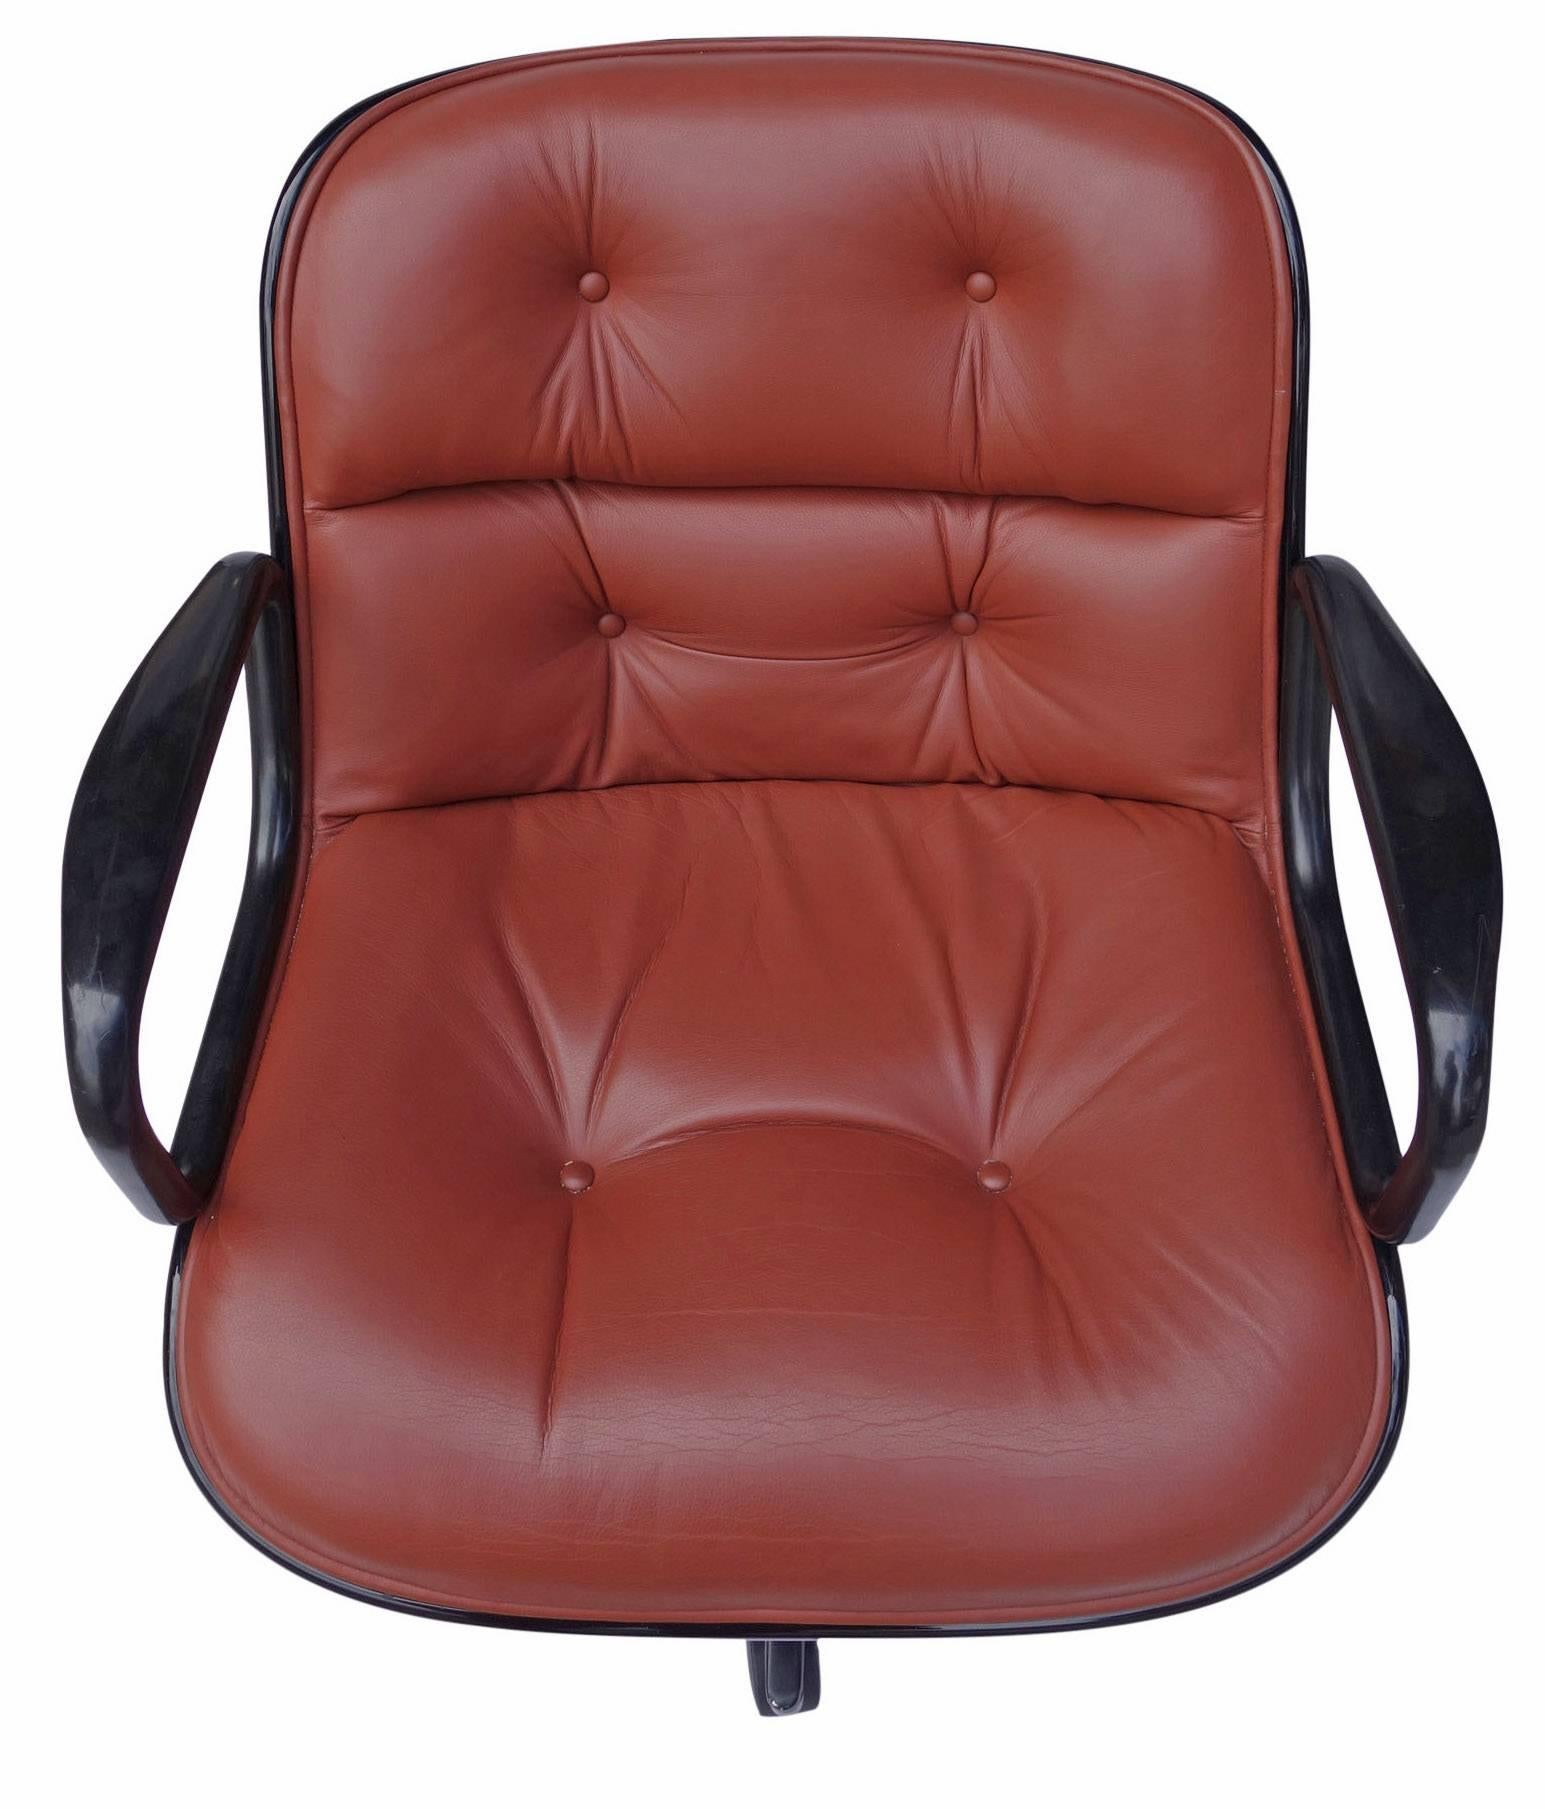 reupholster knoll pollock chair